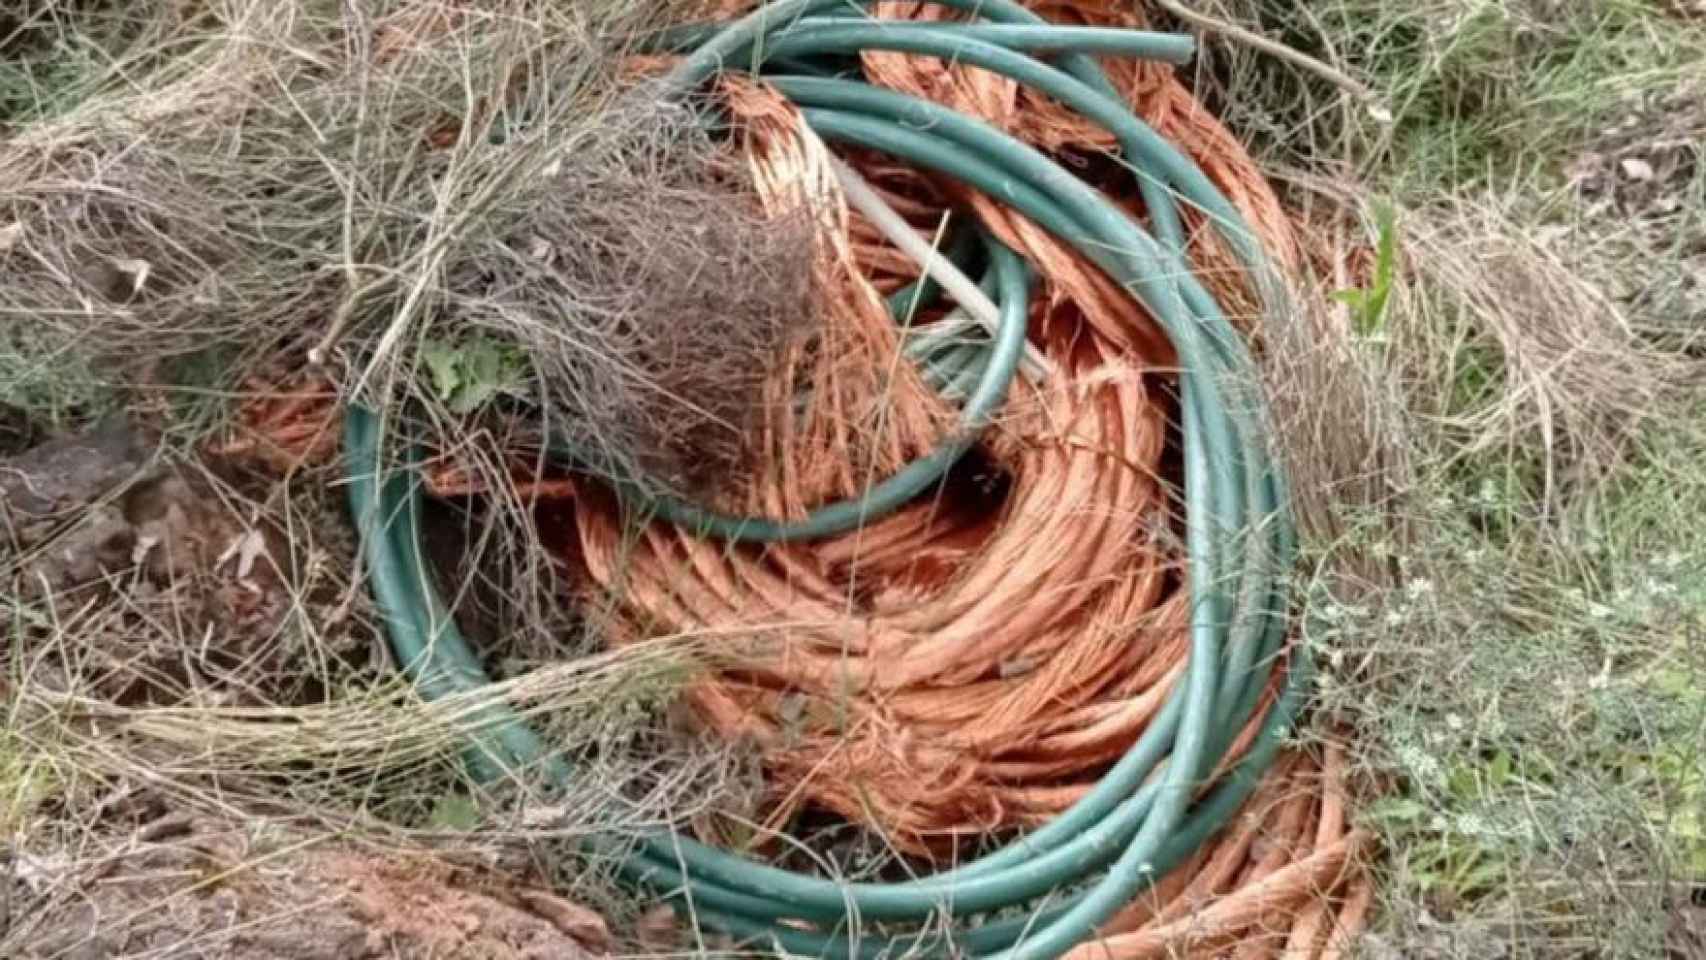 Cable de cobre robado